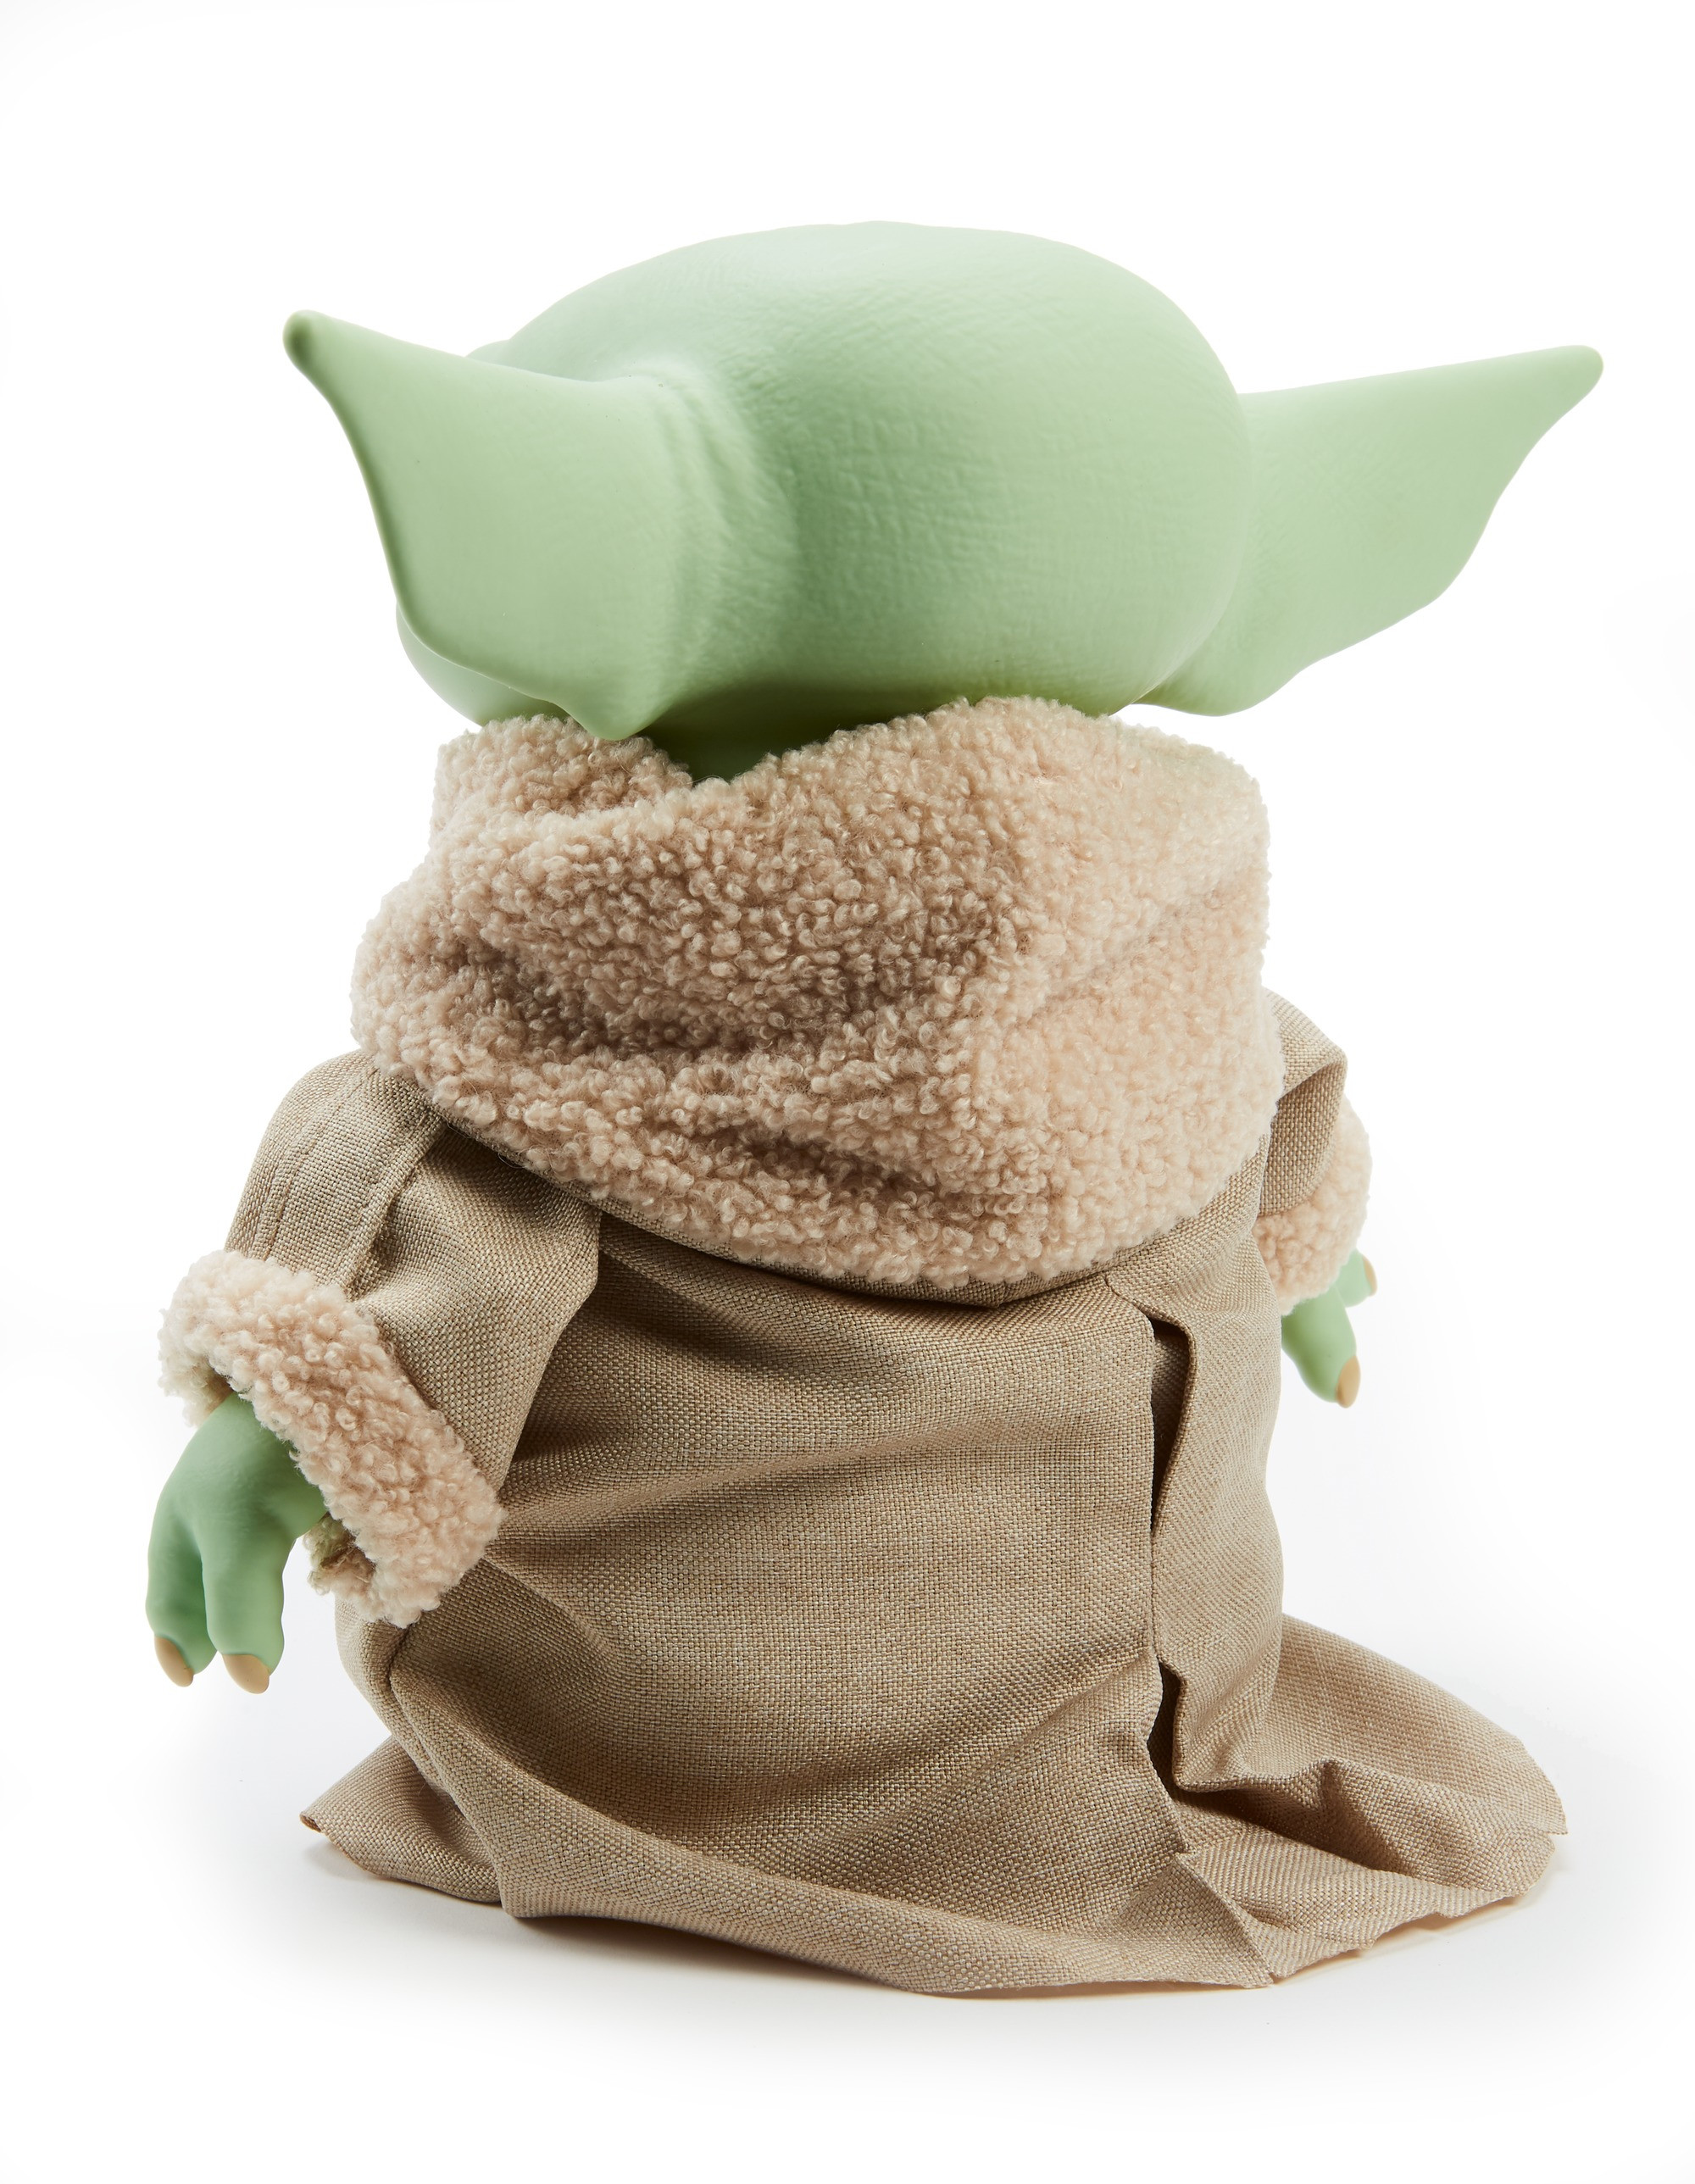 Star Wars Baby Yoda A criança da série The Mandalorian